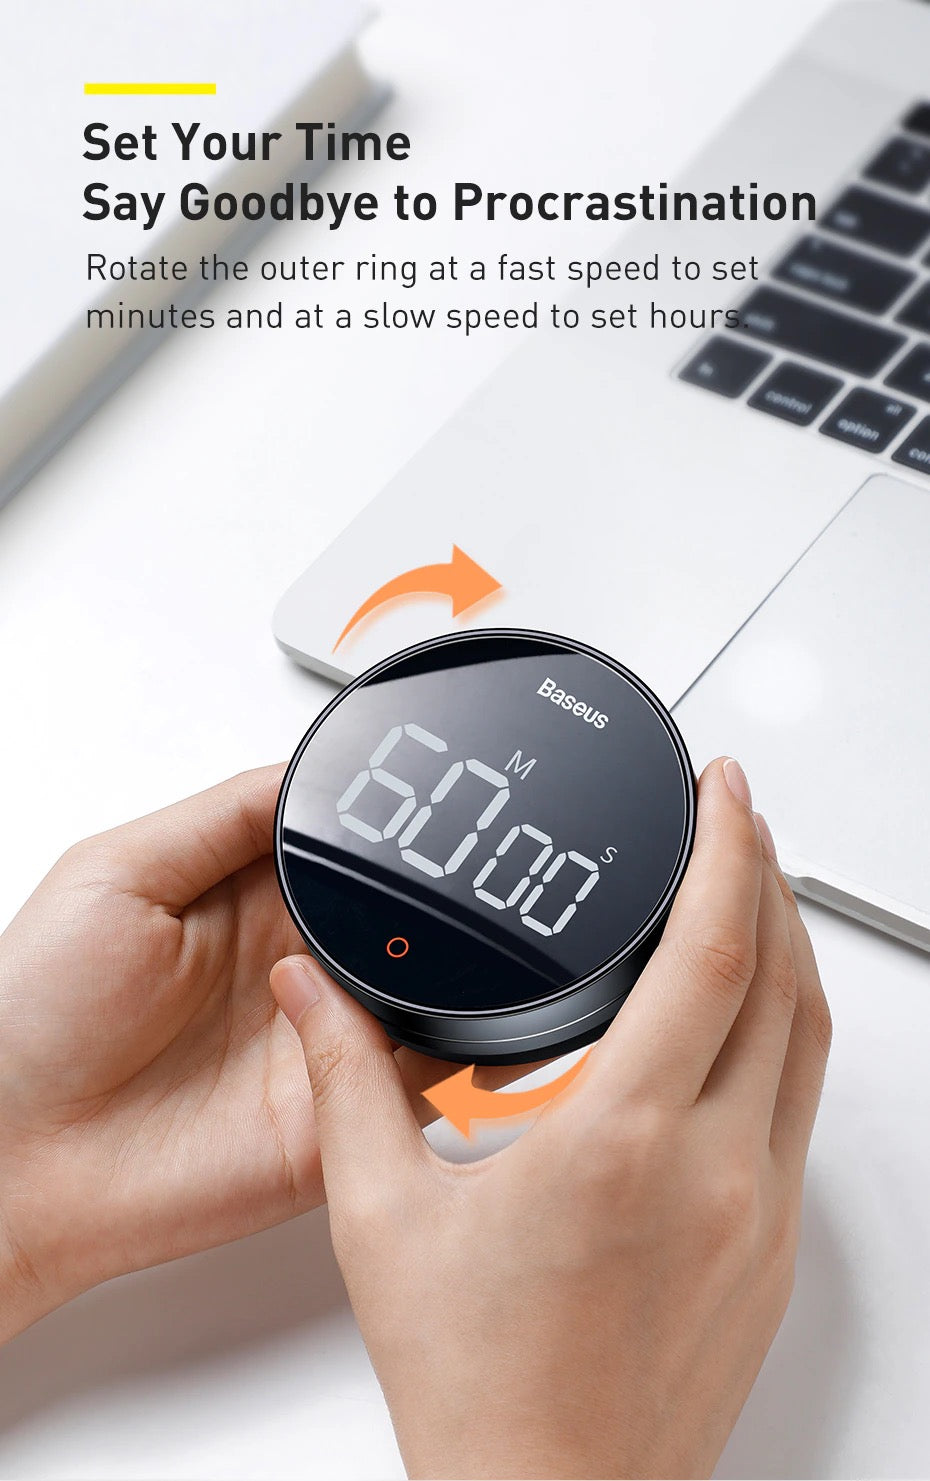 Heyo Rotation Countdown Timer Pro